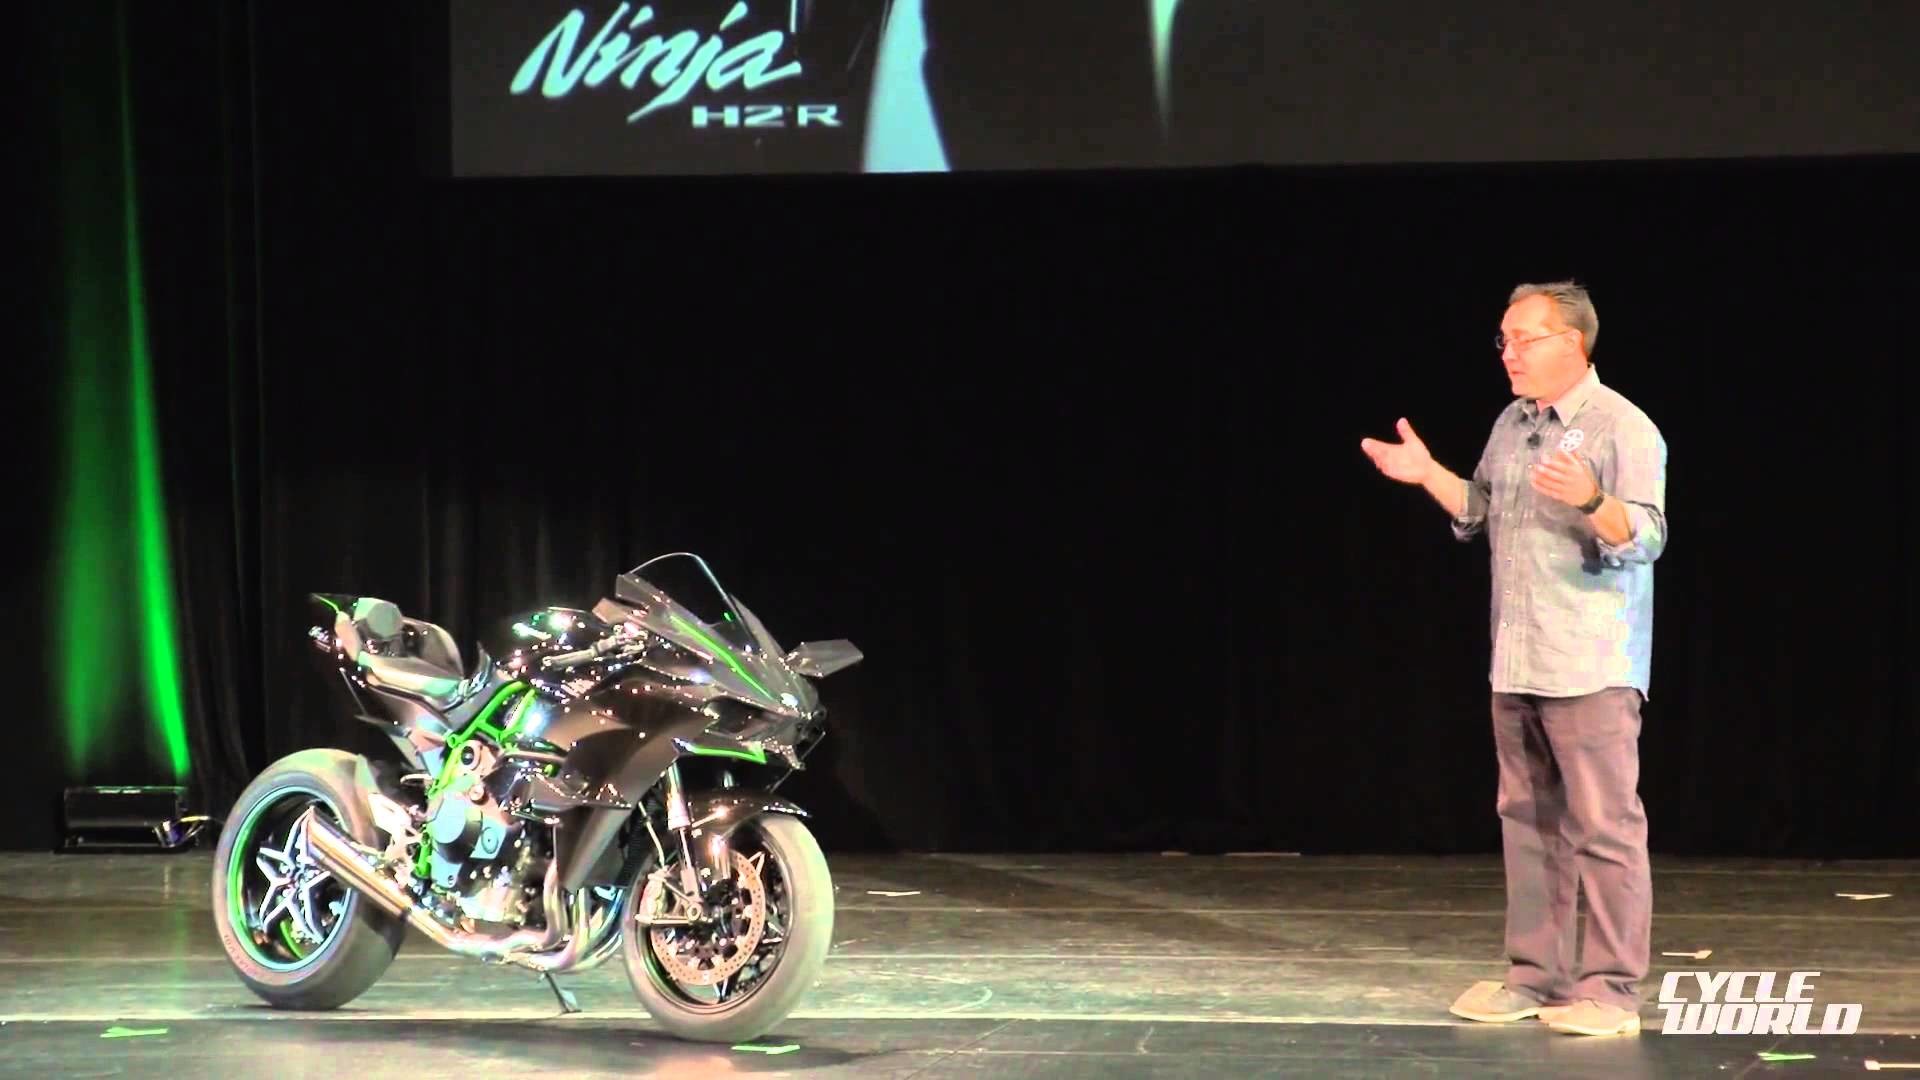 1920x1080 Kawasaki Ninja H2R Superbike Presentation Video From AIMExpo 2014 - YouTube